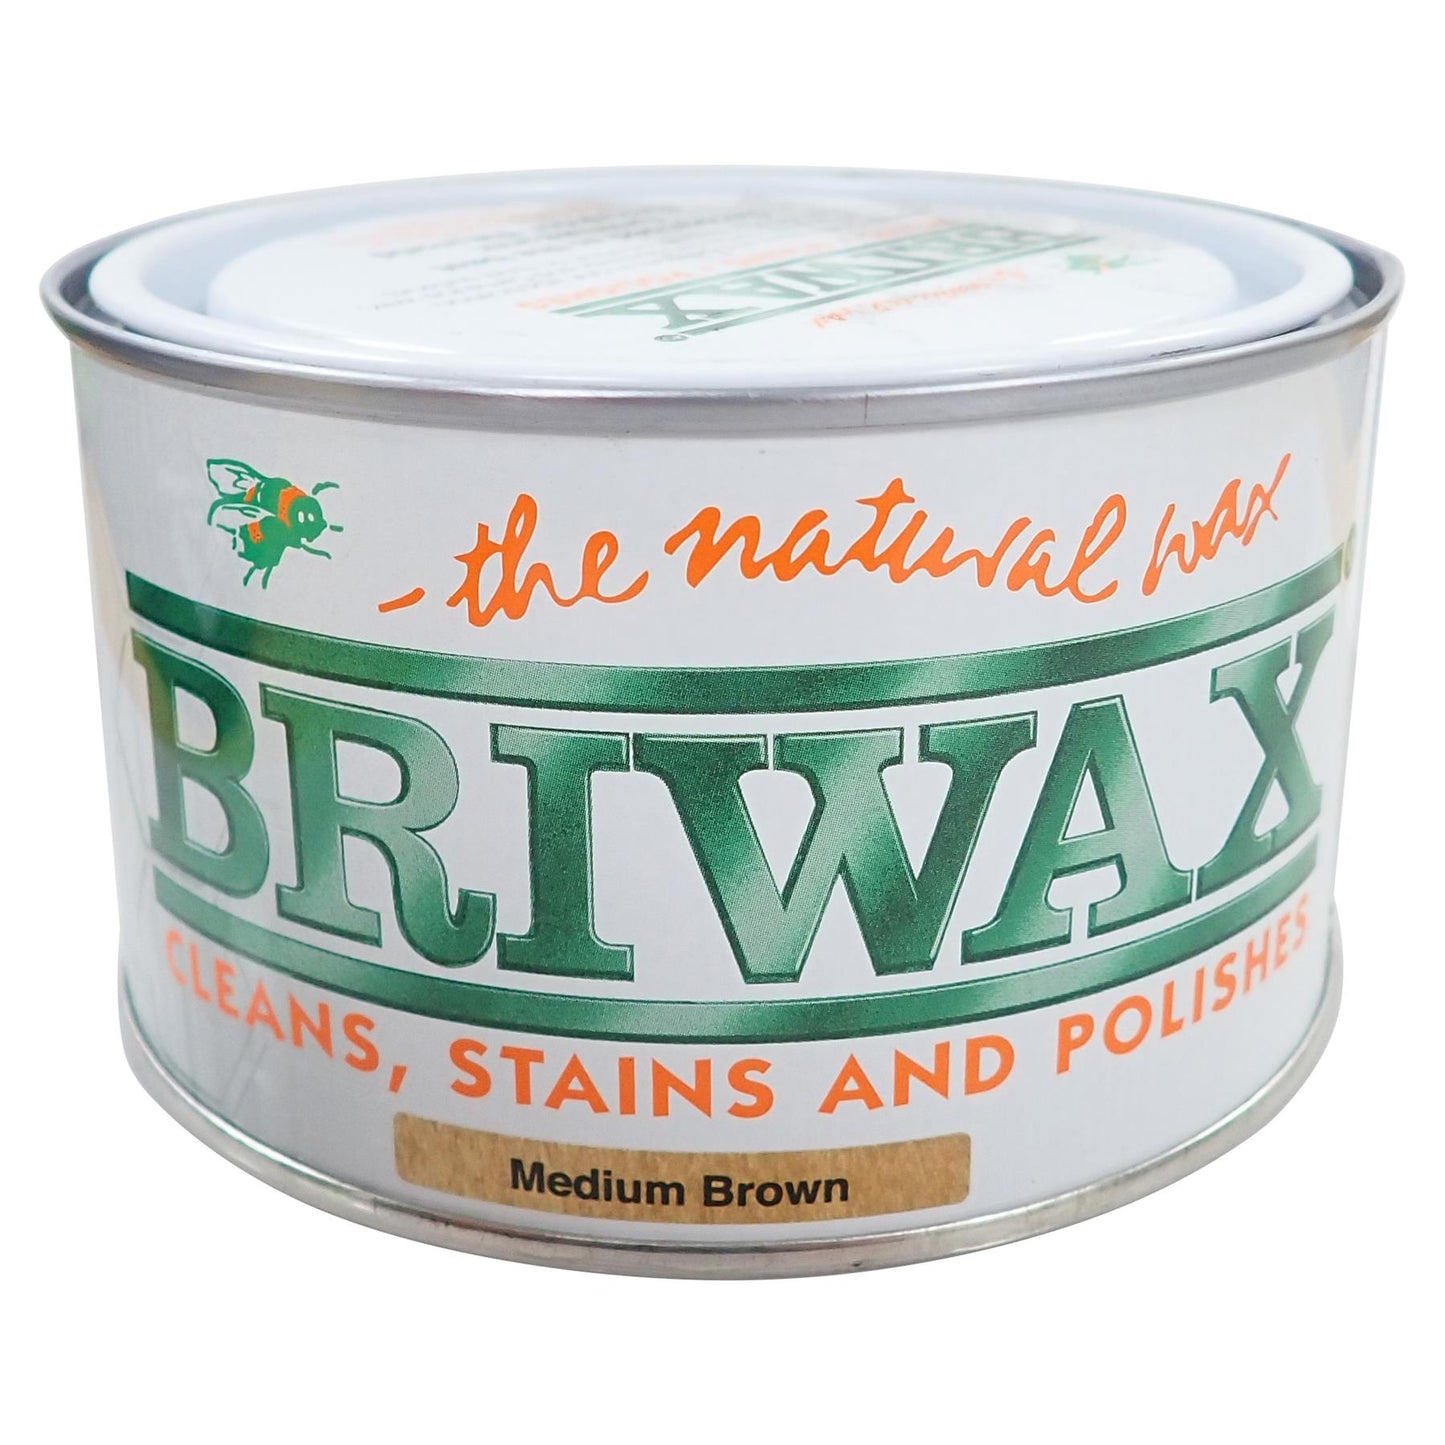 Briwax Original Medium Brown Wax Polish 400g